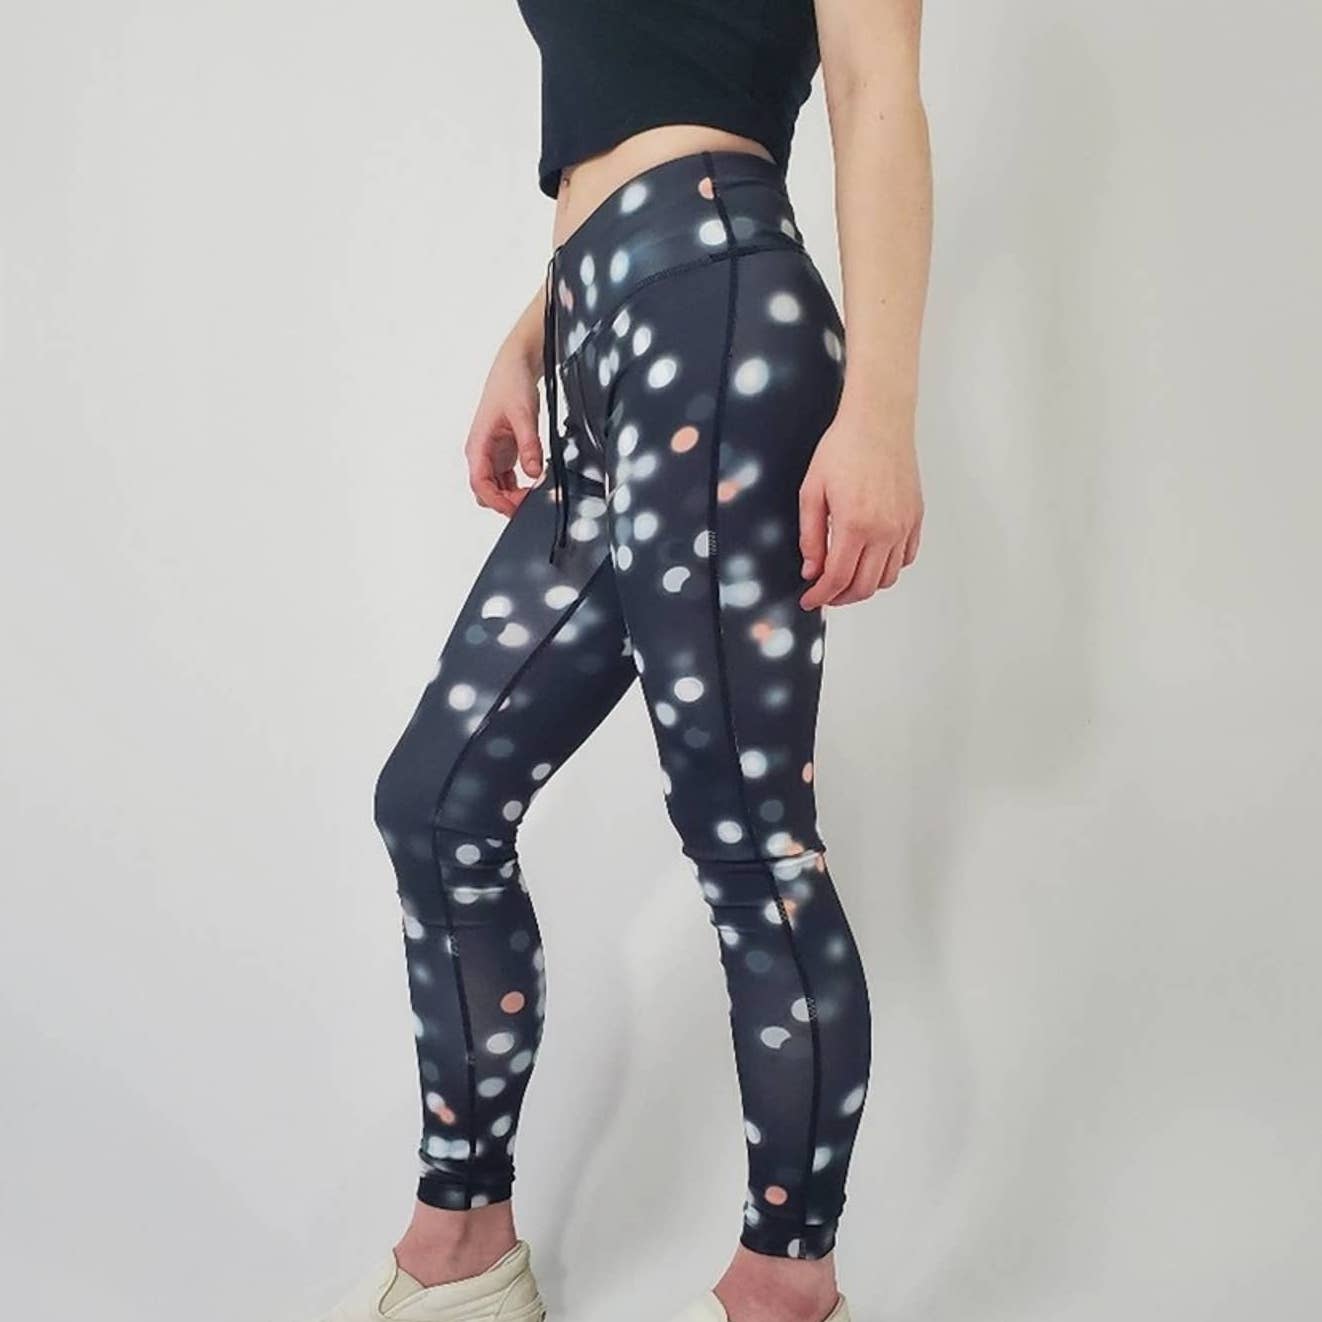 Nike Dri-Fit Essentials Printed Polka Dot Legging Tights Yoga Pants - XS